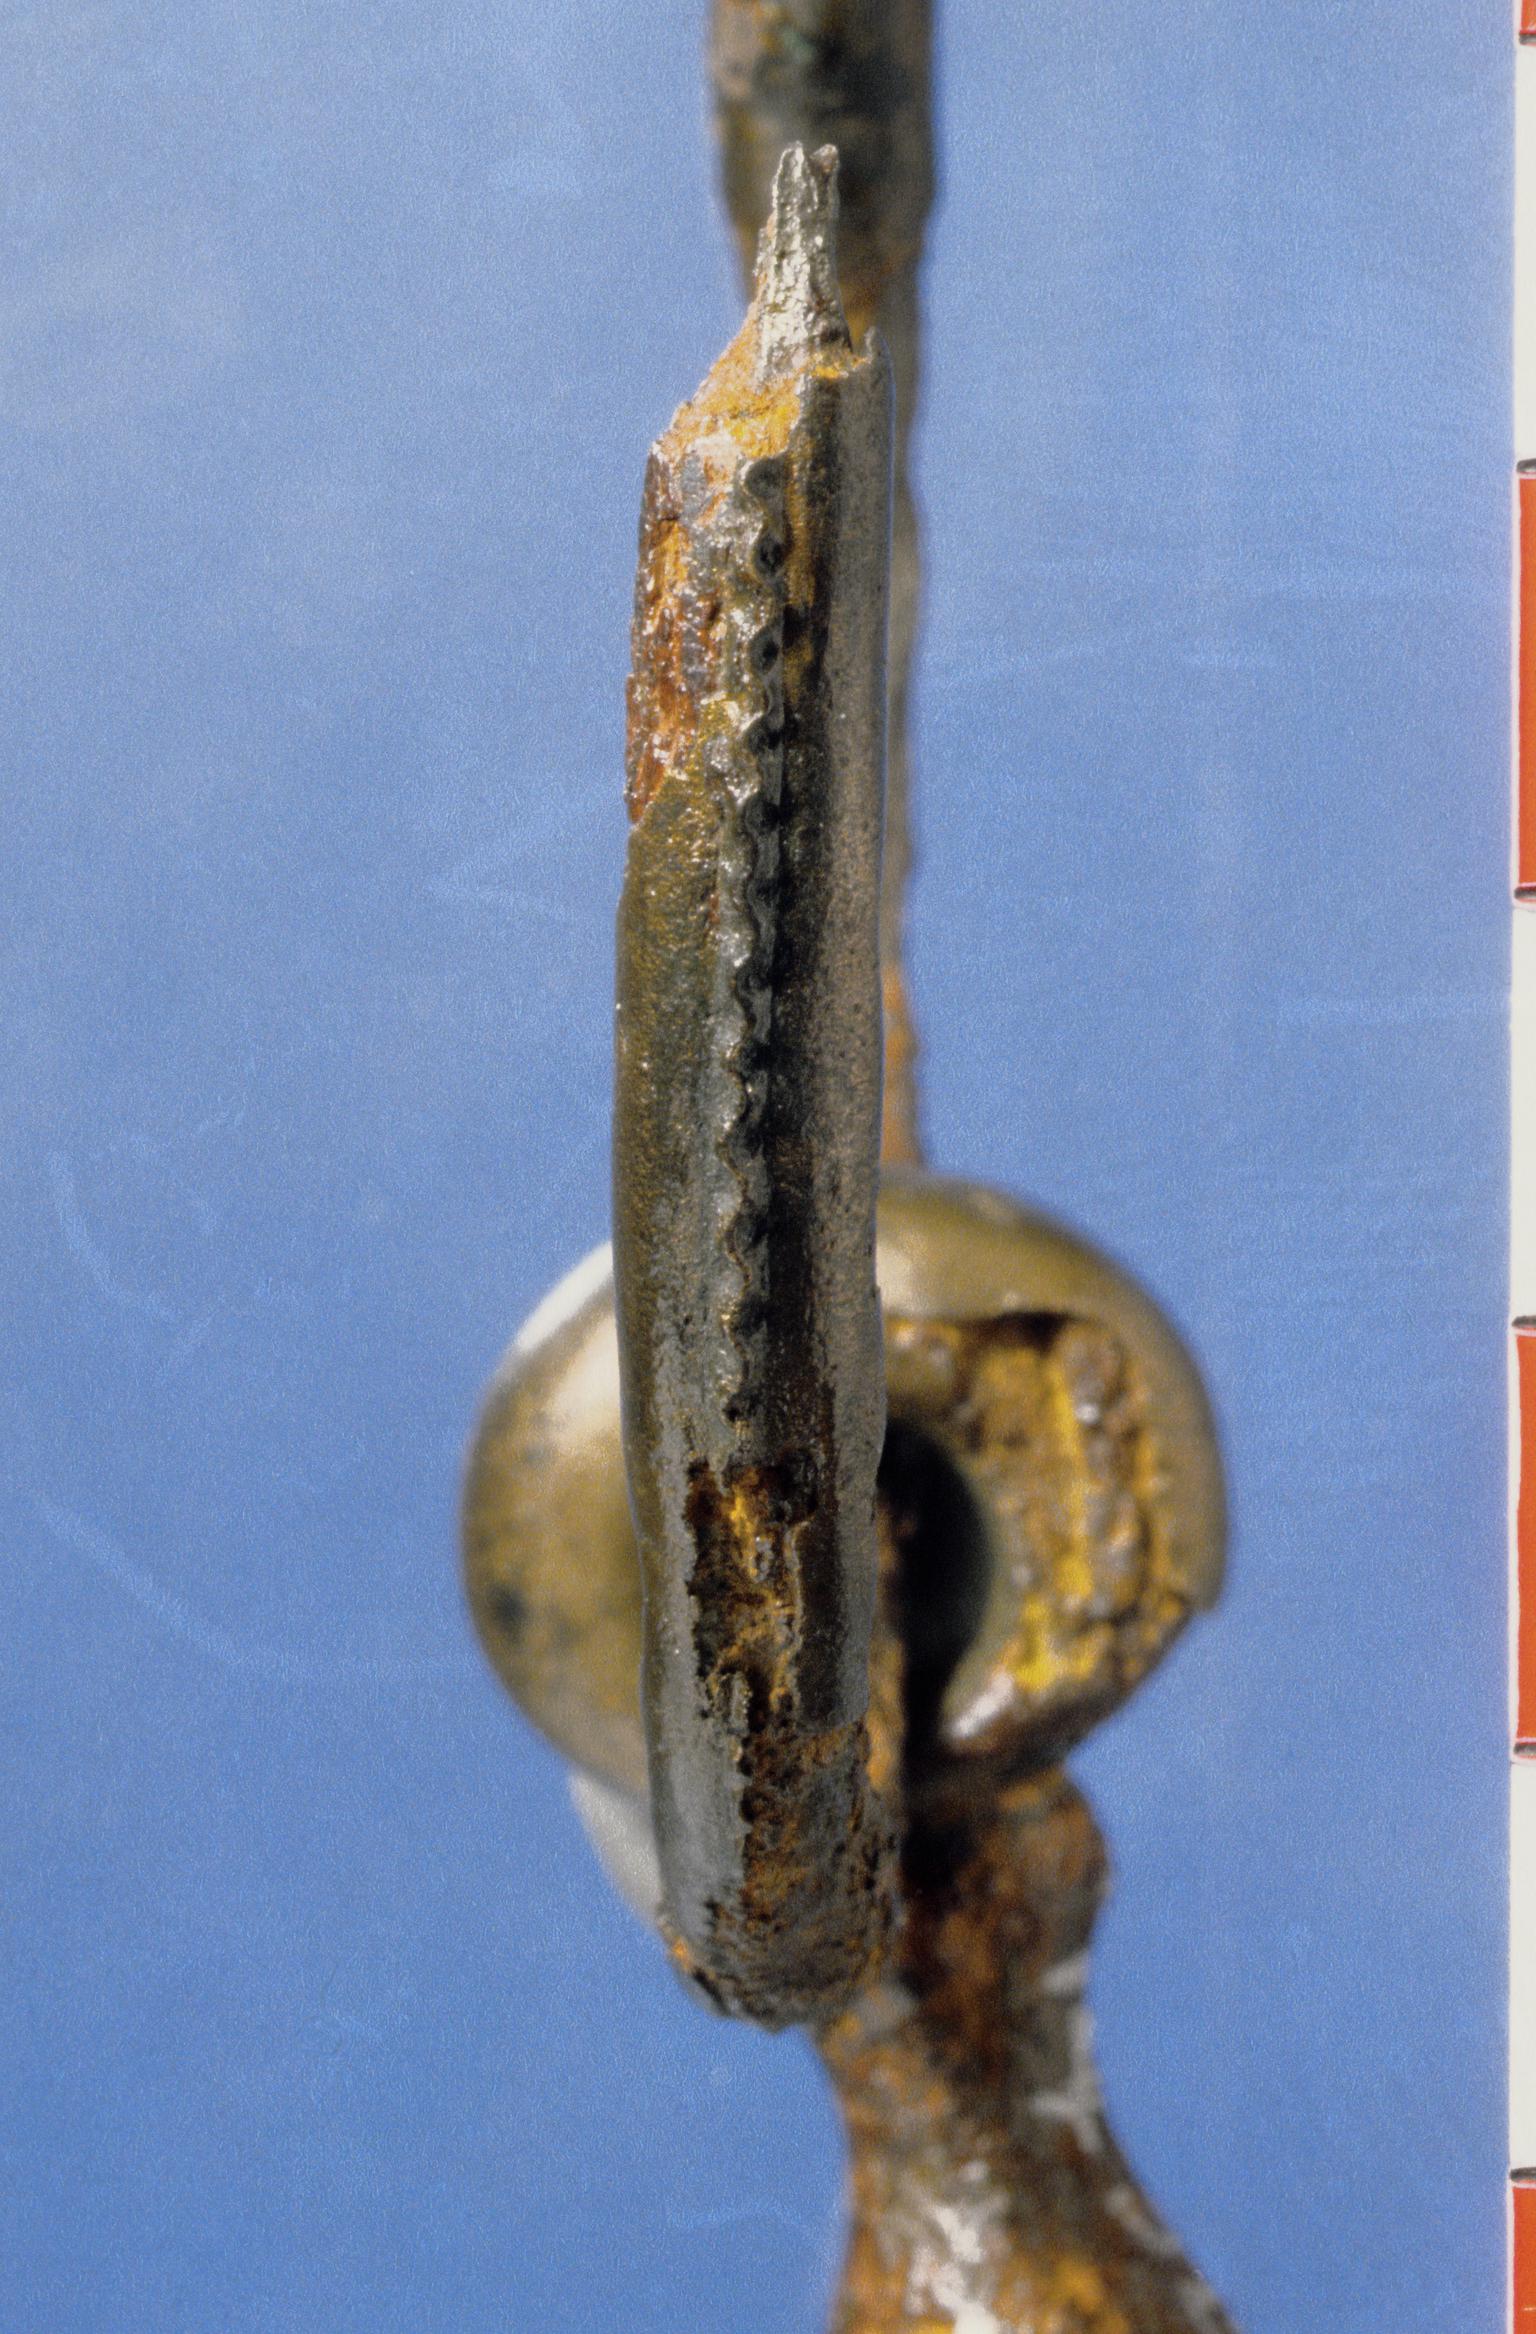 Late Iron Age iron bridle bit